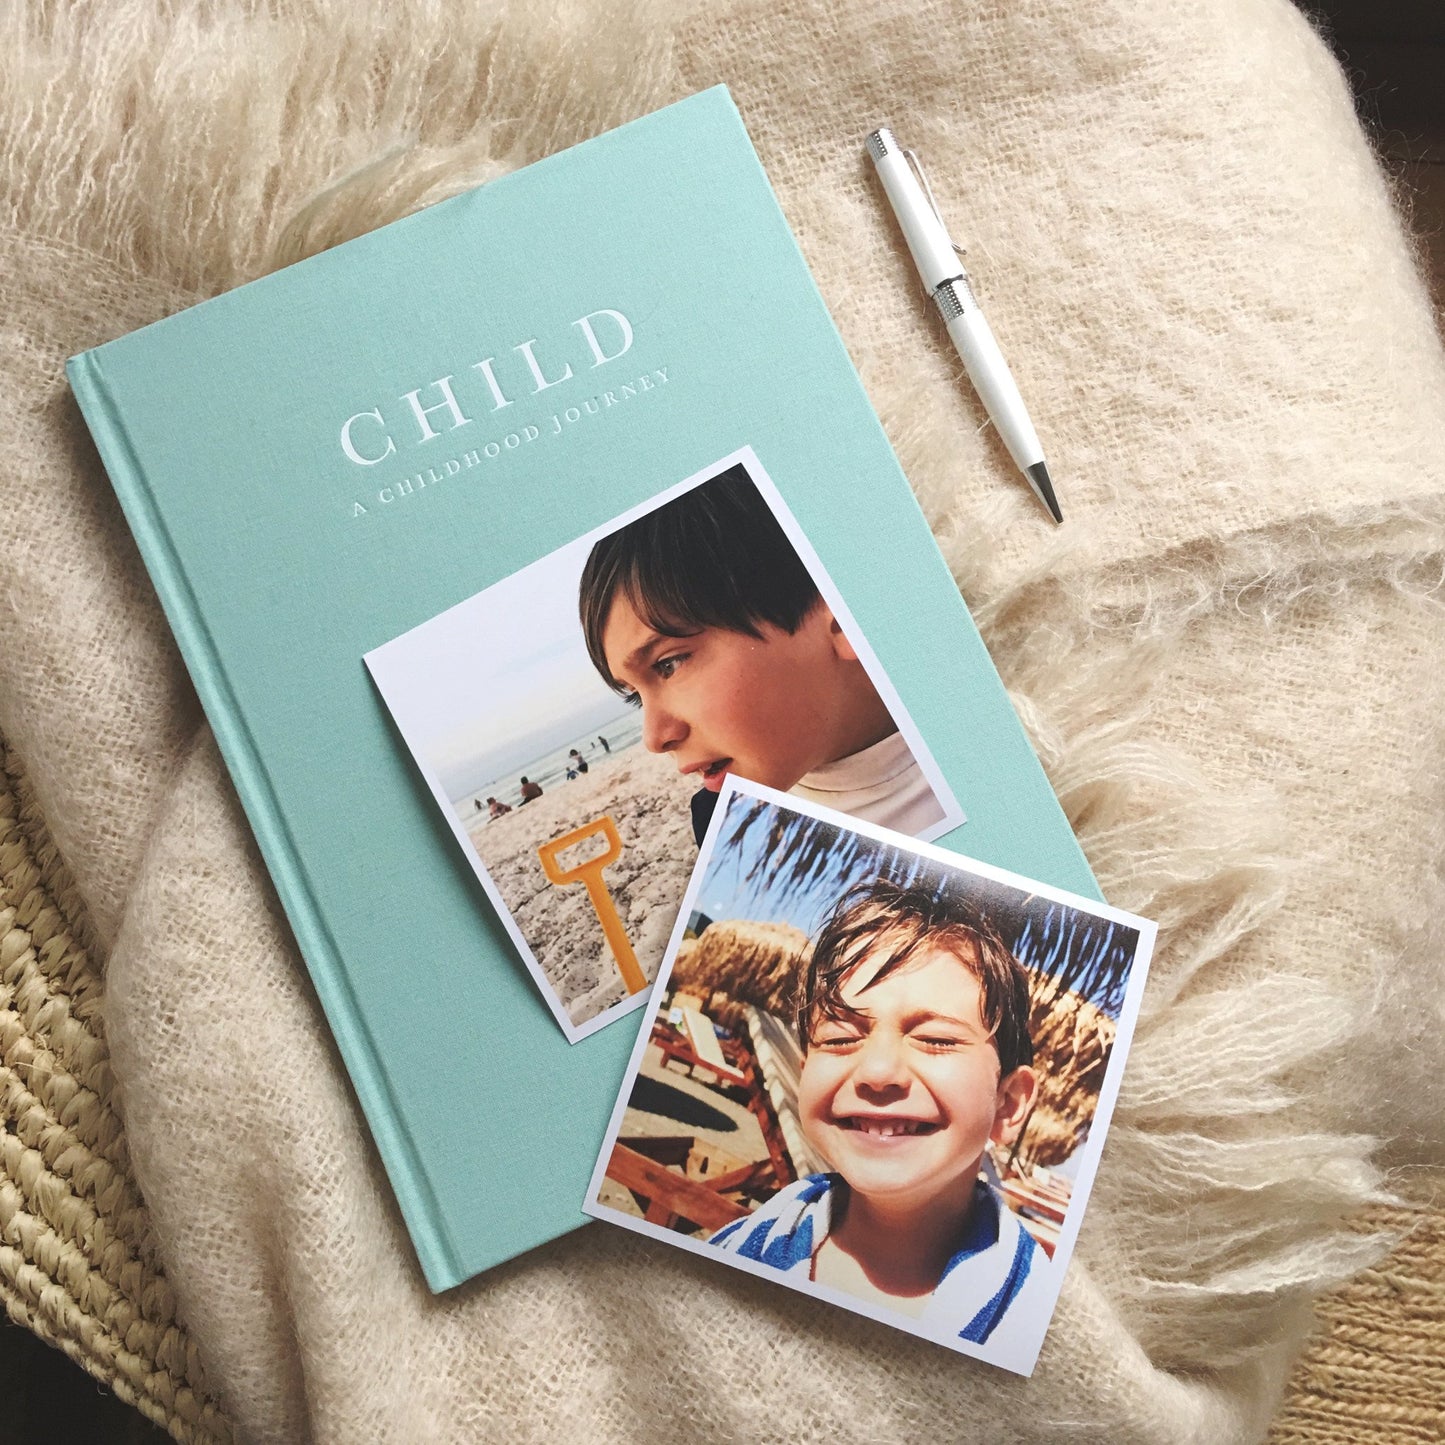 Child - A Childhood Journey Journal